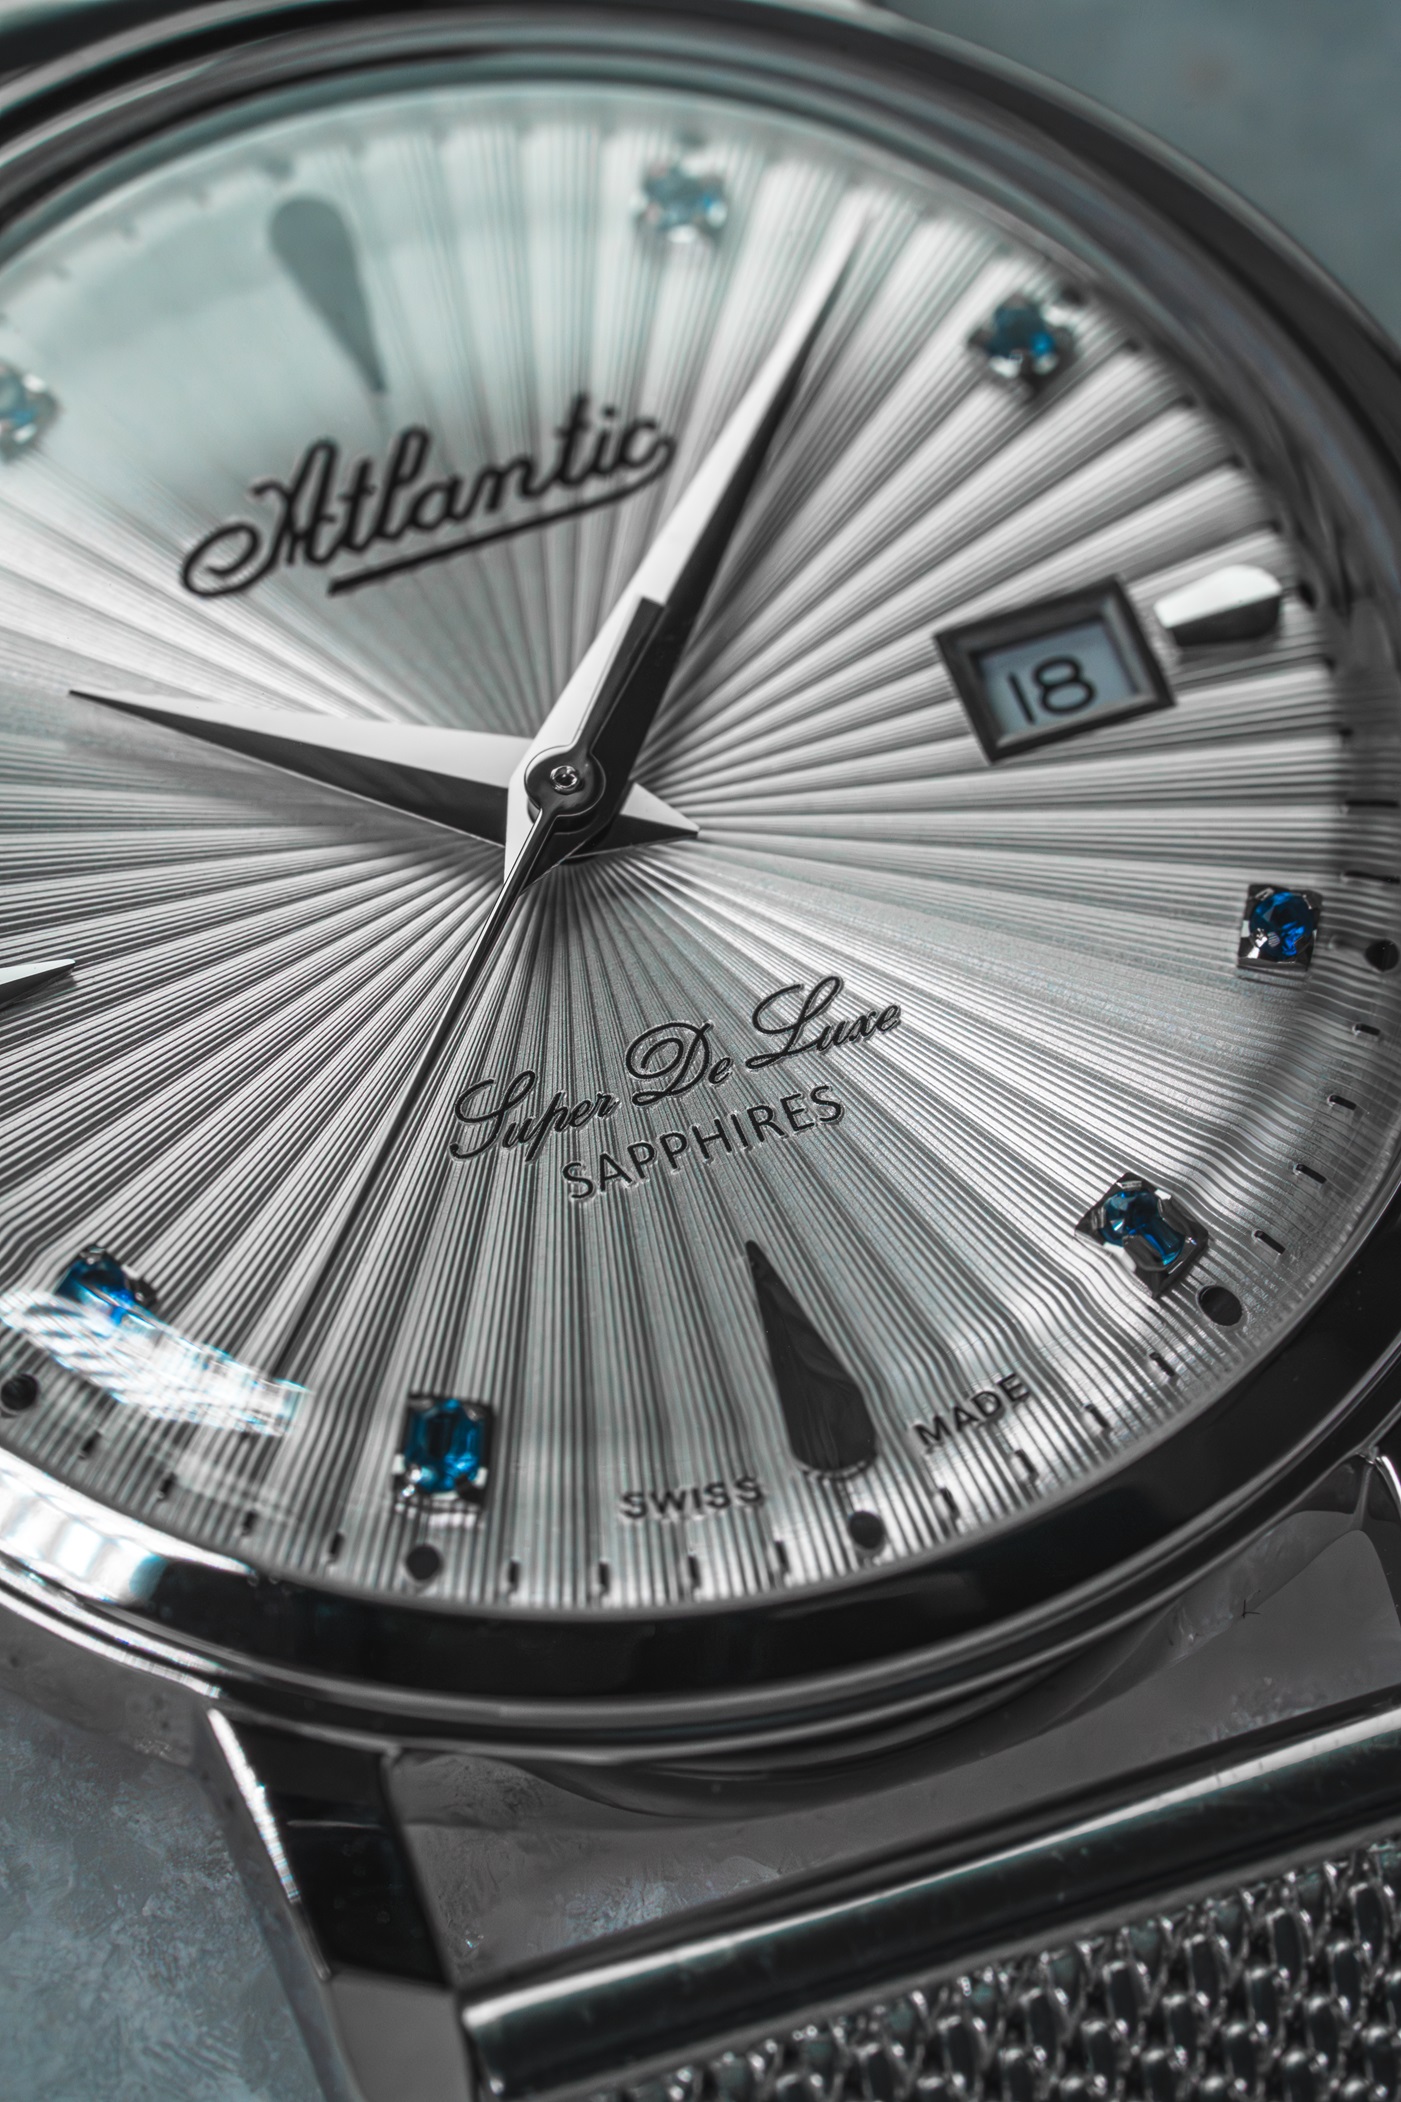 Atlantic Super De Luxe Sapphire Edition / Milanaise Edelstahl